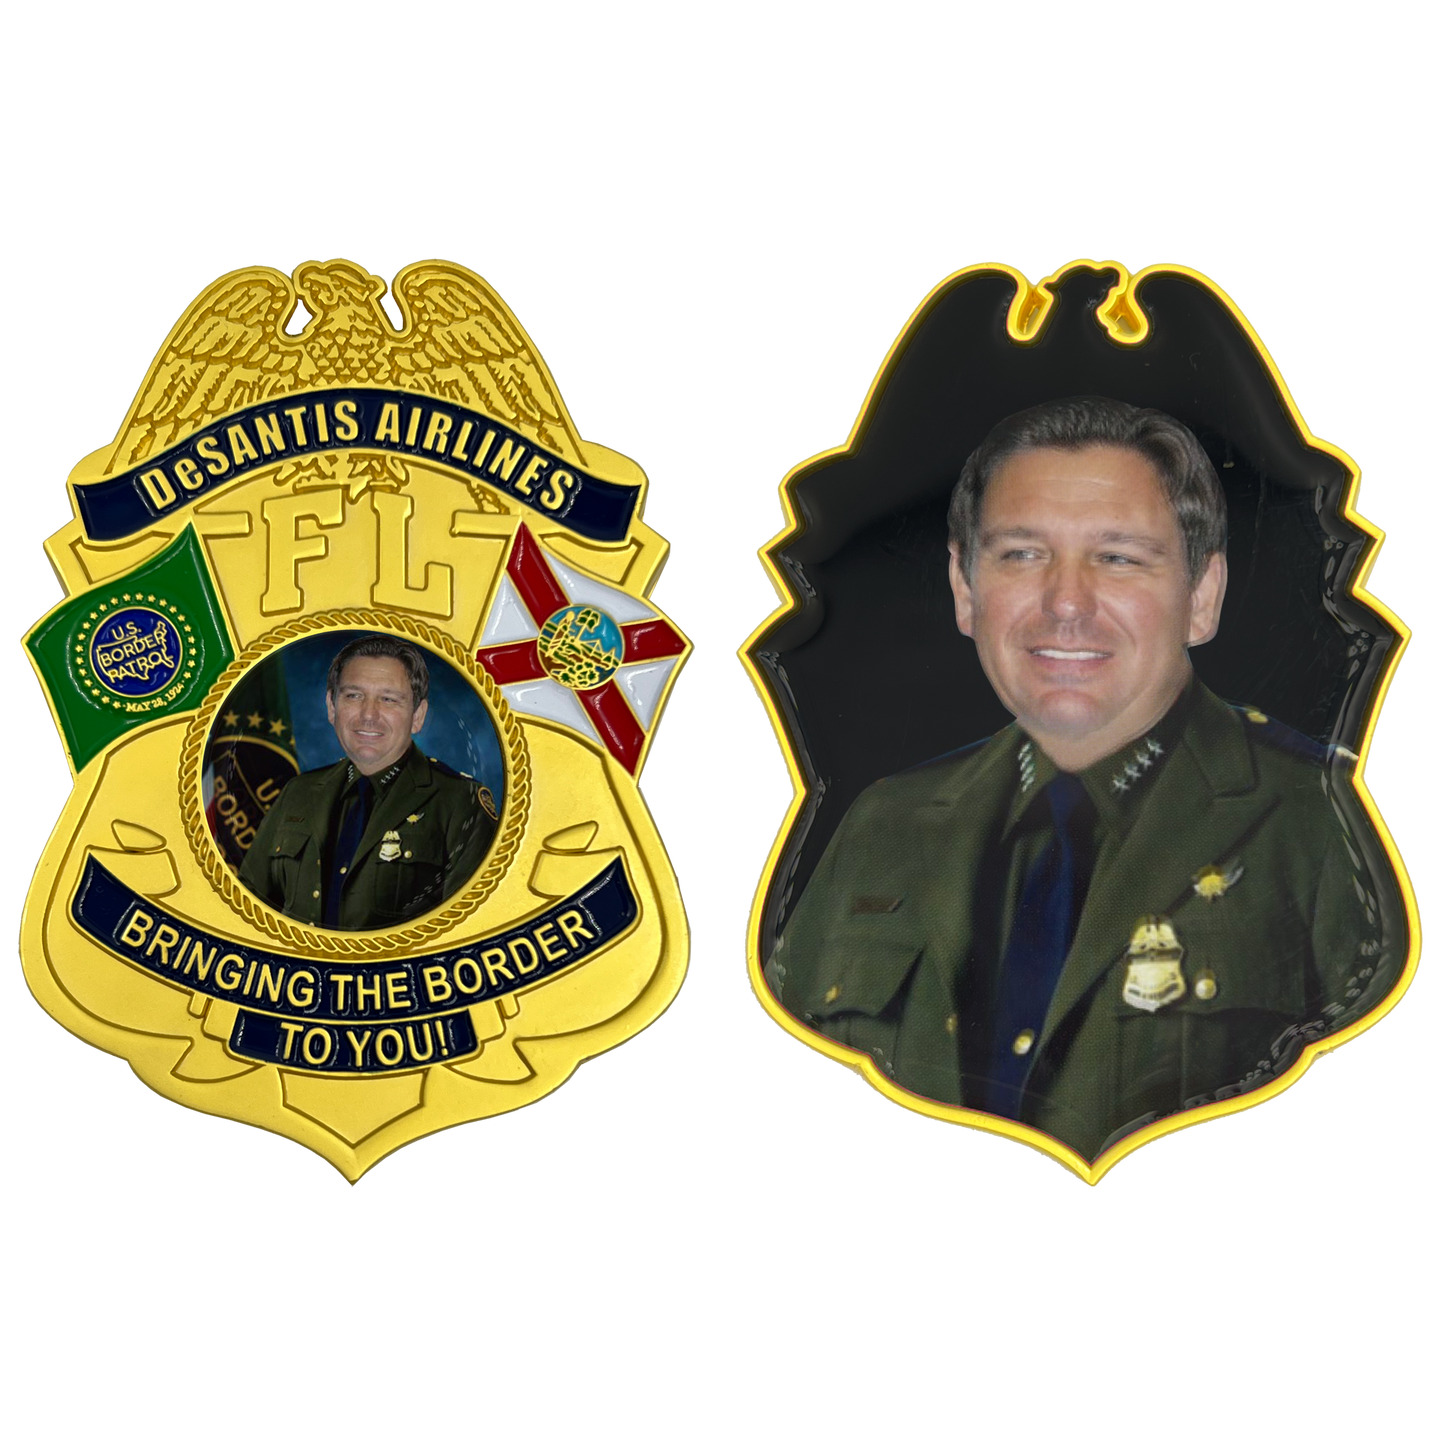 EL9-002A Florida Governor Ron DeSantis Airlines Border Patrol Challenge Coin